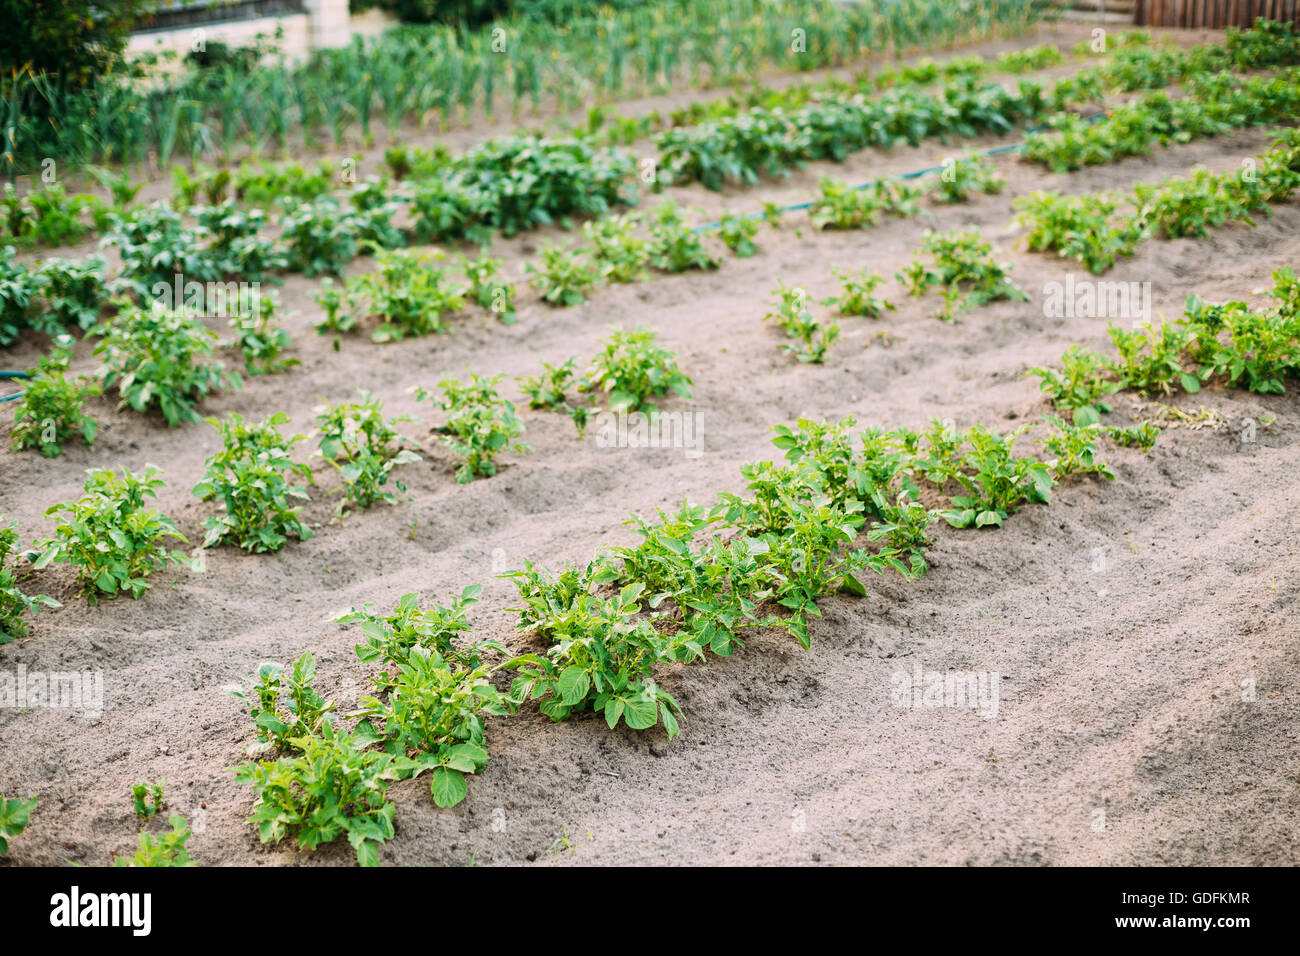 Potatoes Plants Growing In Raised Beds In Vegetable Garden. Summer Season Stock Photo